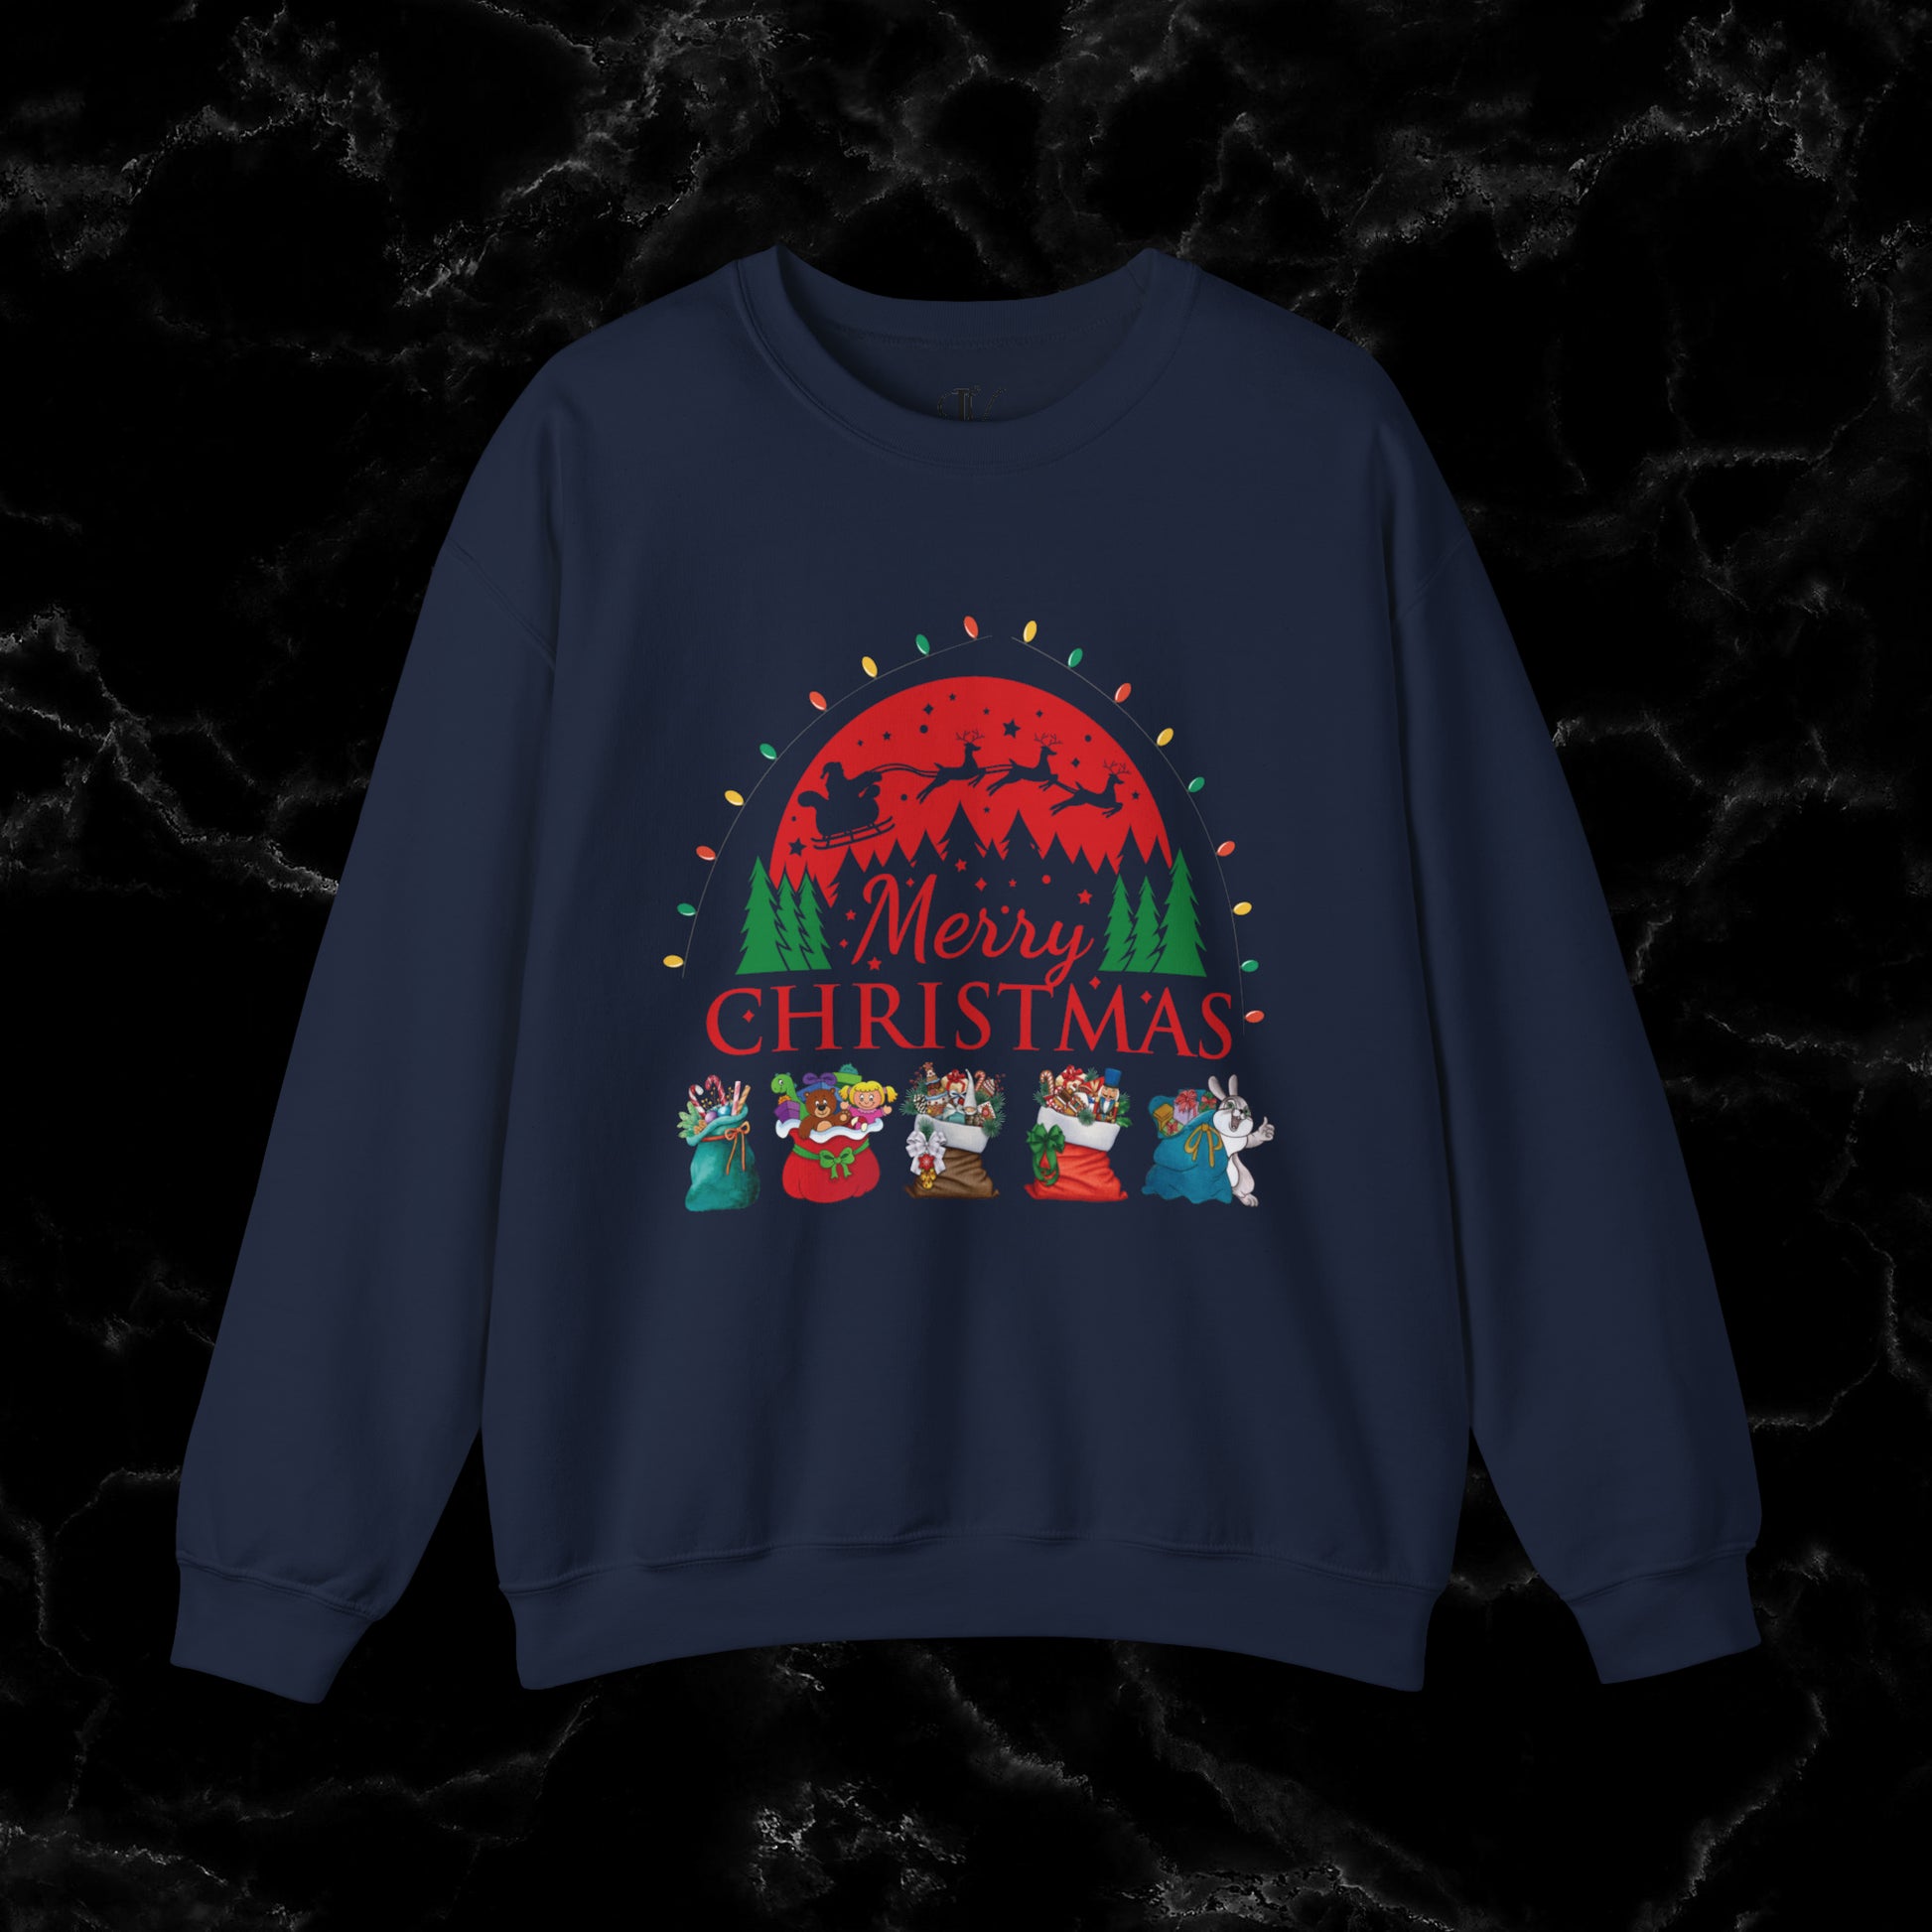 Merry Christmas Sweatshirt - Christmas Shirt with Santa and Festive Theme Sweatshirt S Navy 